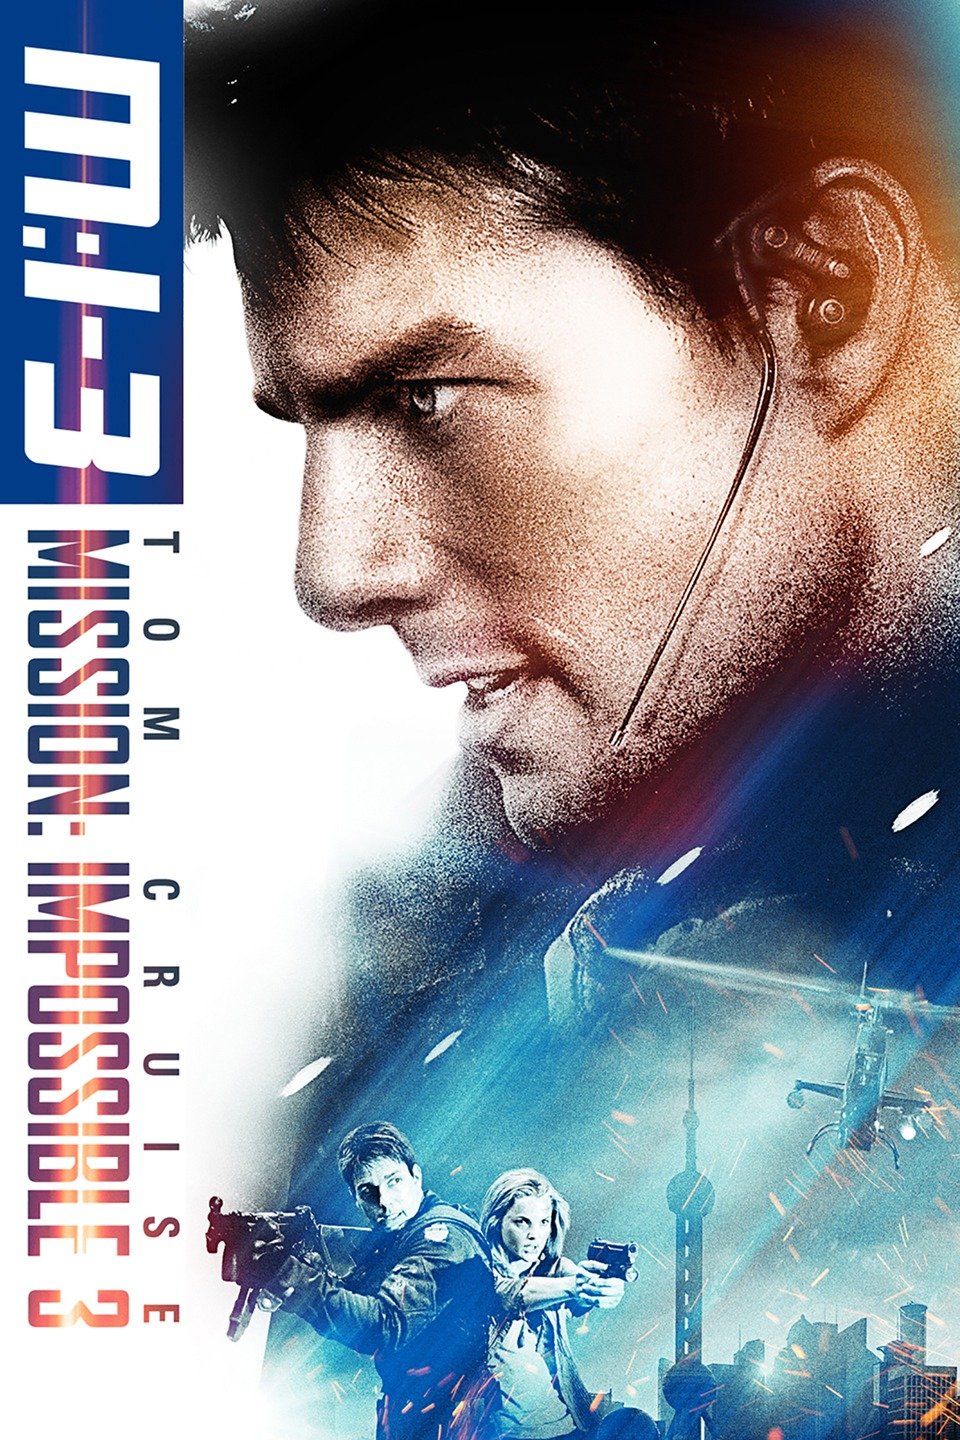 [MINI Super-HQ] Mission: Impossible III (2006) ผ่าปฏิบัติการสะท้านโลก 3 [1080p] [พากย์ไทย 5.1 + อังกฤษ DTS] [BluRay.DTS.x264] [บรรยายไทย + อังกฤษ] [เสียงไทย + ซับไทย] [ONE2UP]